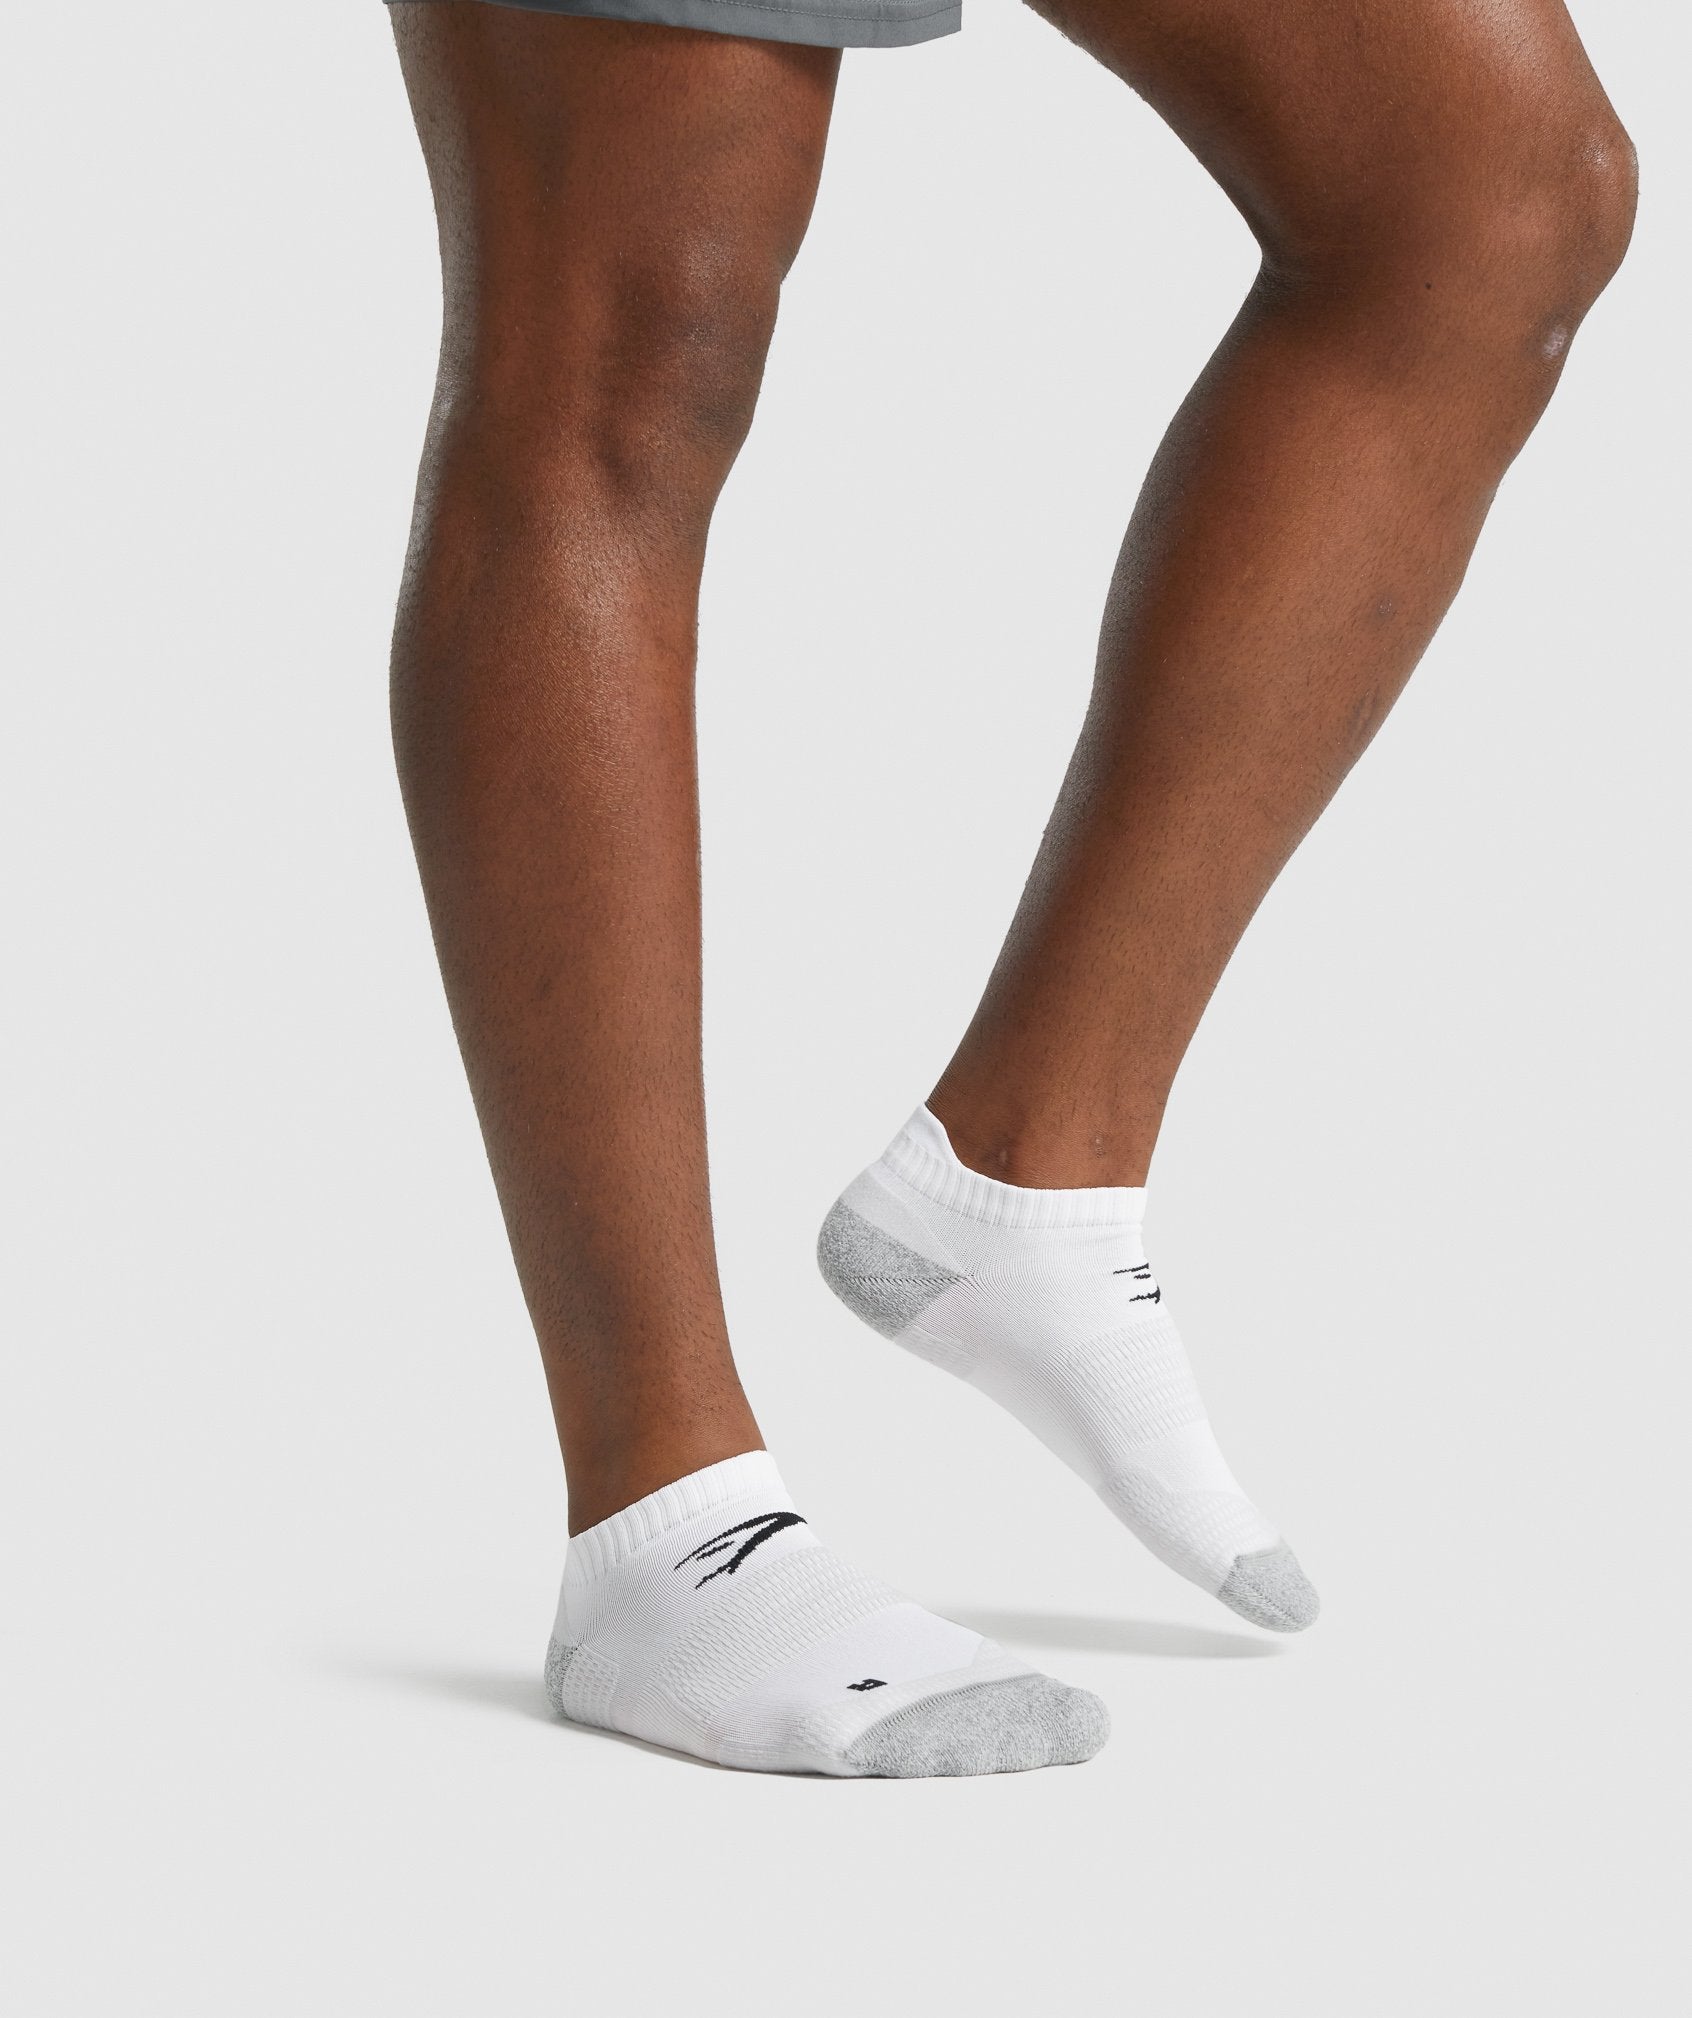 Gymshark Ankle Performance Socken Damen Weiß | 9527641-KI